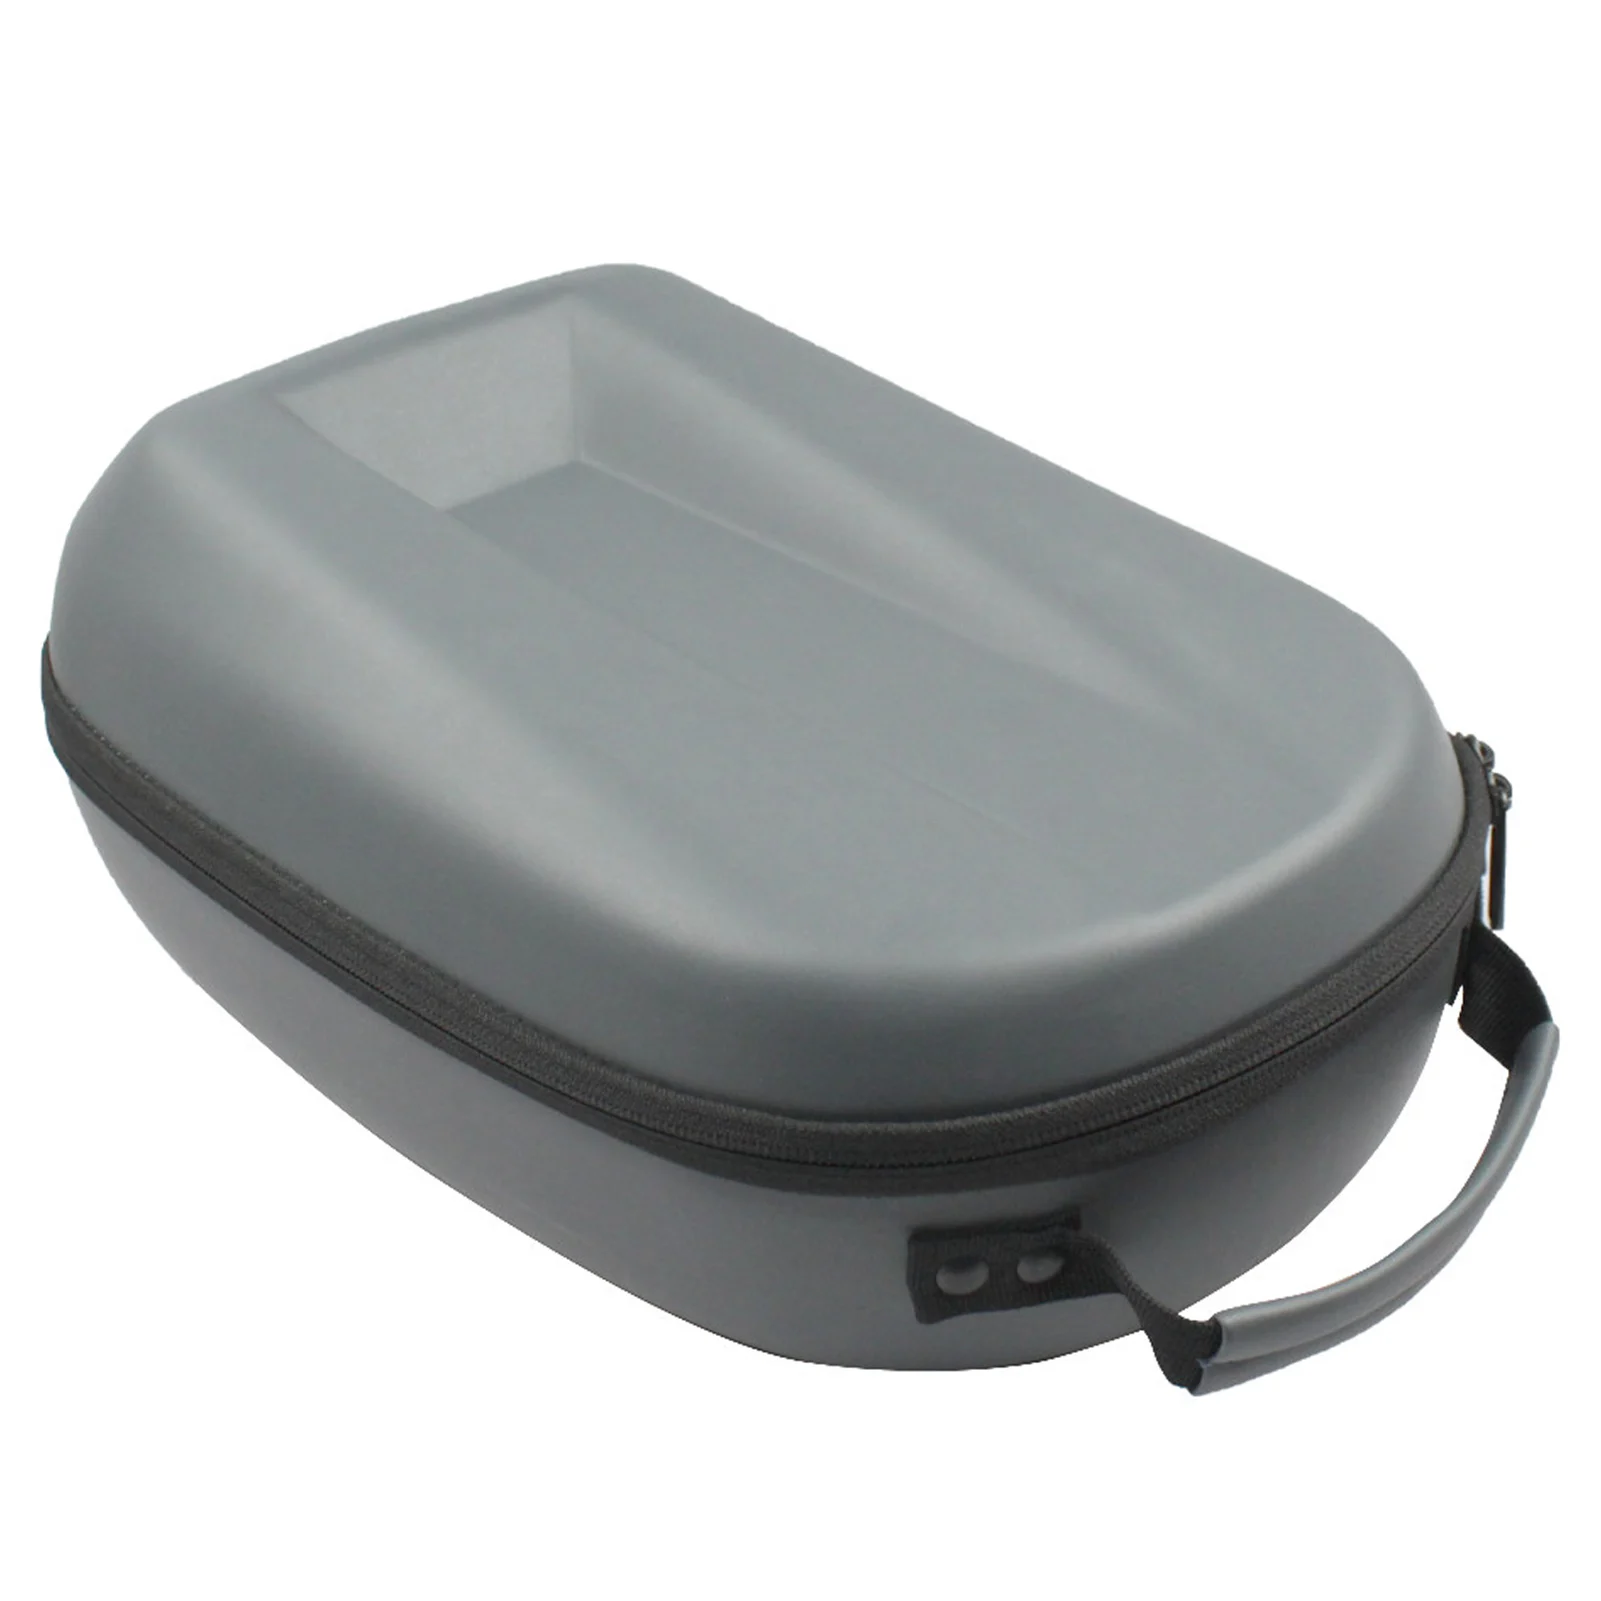 Protable Storage Bag VR Accessories For Oculus Quest 2 Vr Headset Travel Carrying Case EVA Hard Box For OculusQuest 2 Handbag